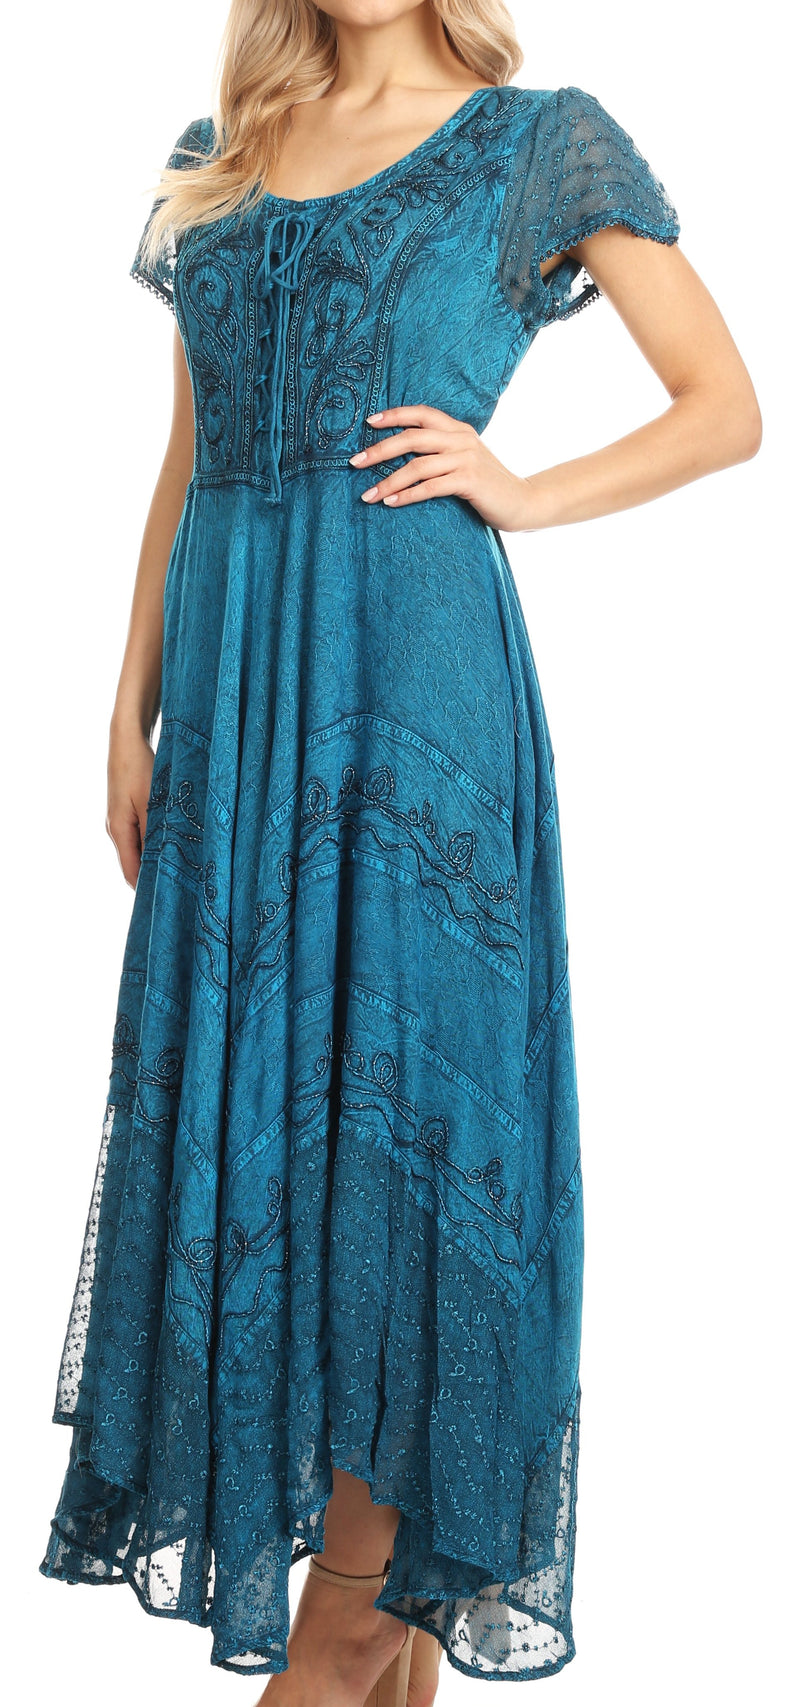 Sakkas Marigold Embroidered Fairy Dress